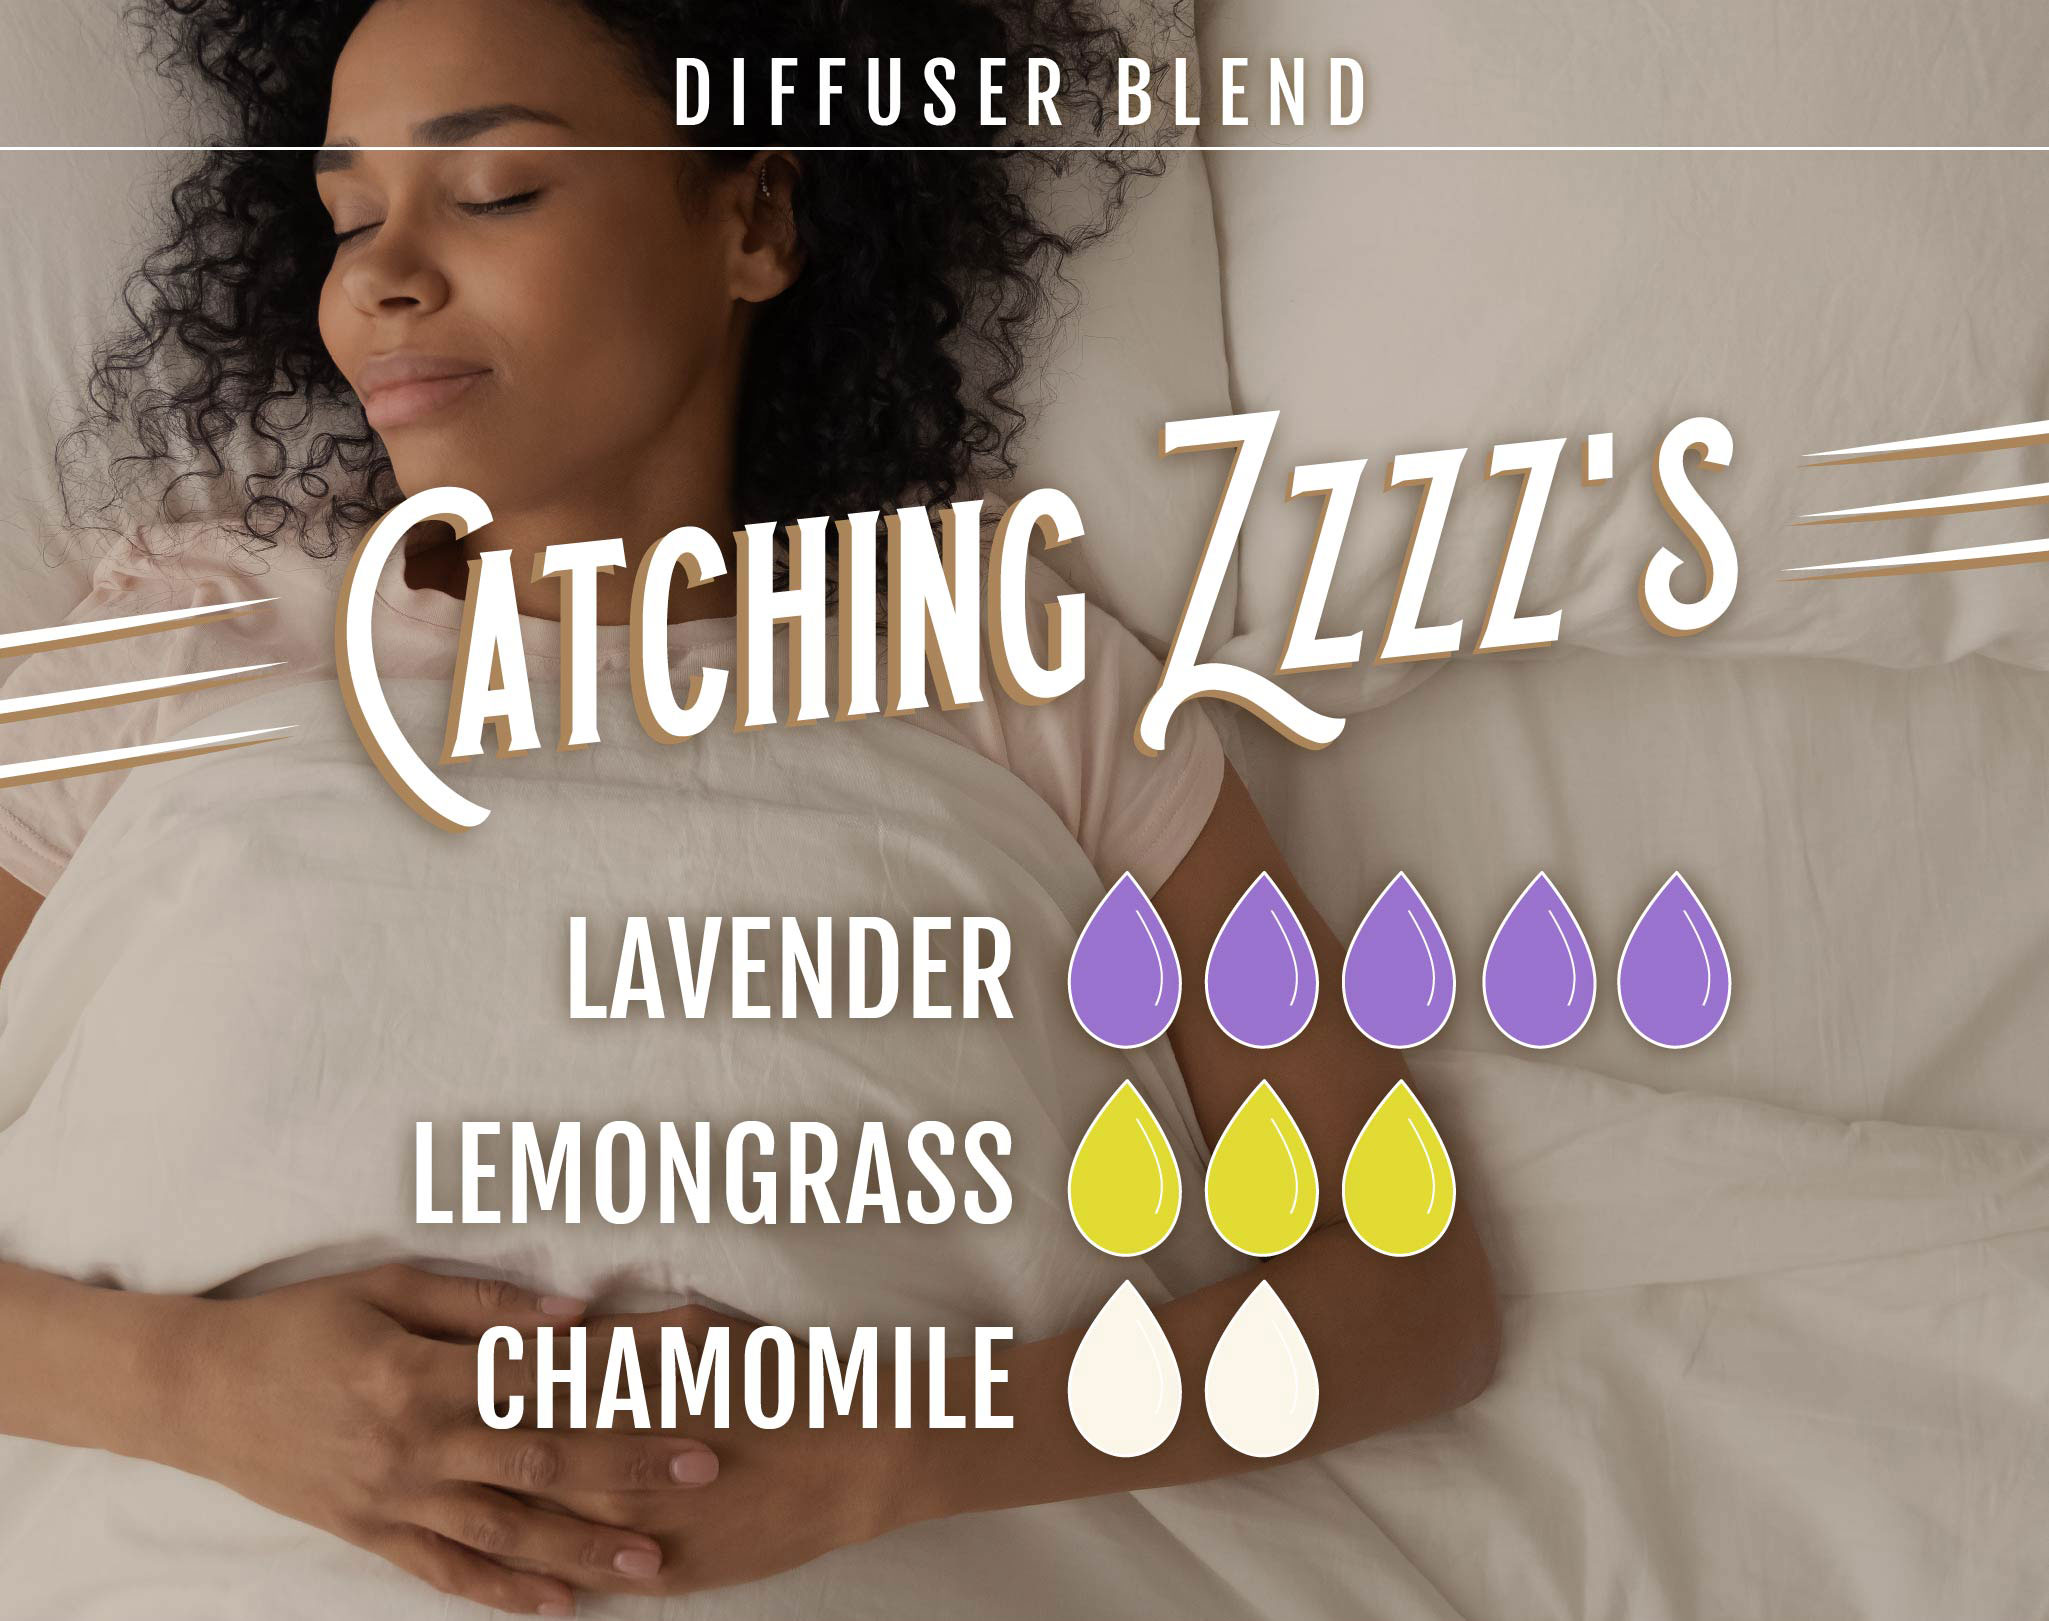 Lavender Essential Oil Diffuser Blend - Catching Zzzz's - 5 drops Lavender, 3 drops Lemongrass, 2 Drops Chamomile